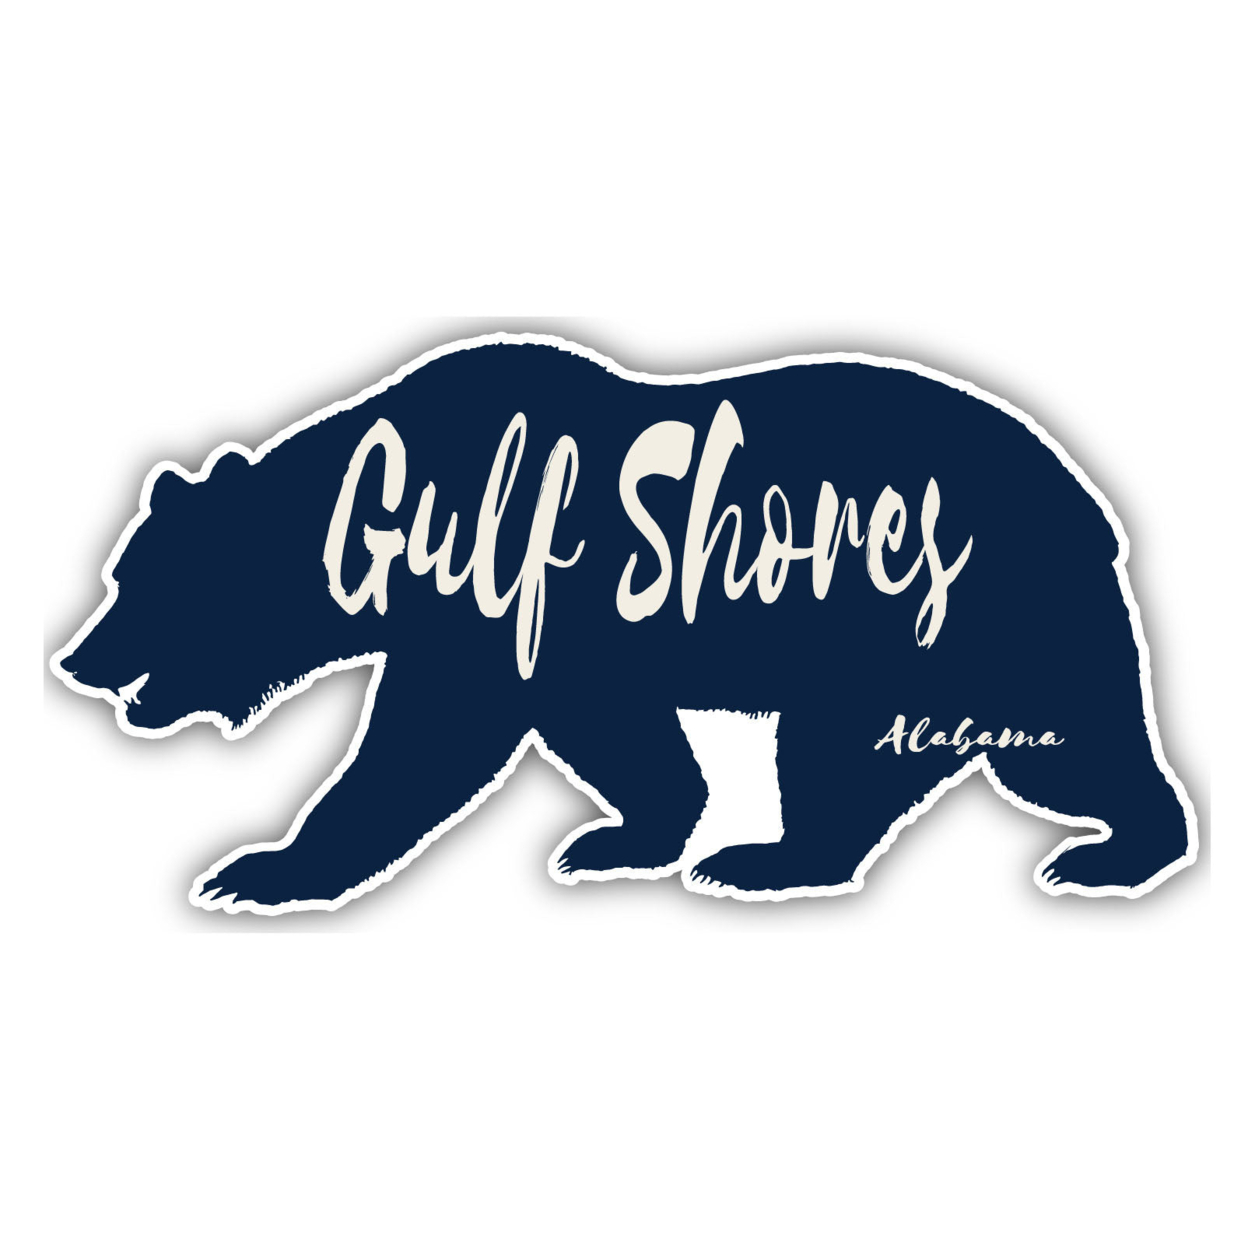 Gulf Shores Alabama Souvenir Decorative Stickers (Choose Theme And Size) - Single Unit, 12-Inch, Tent